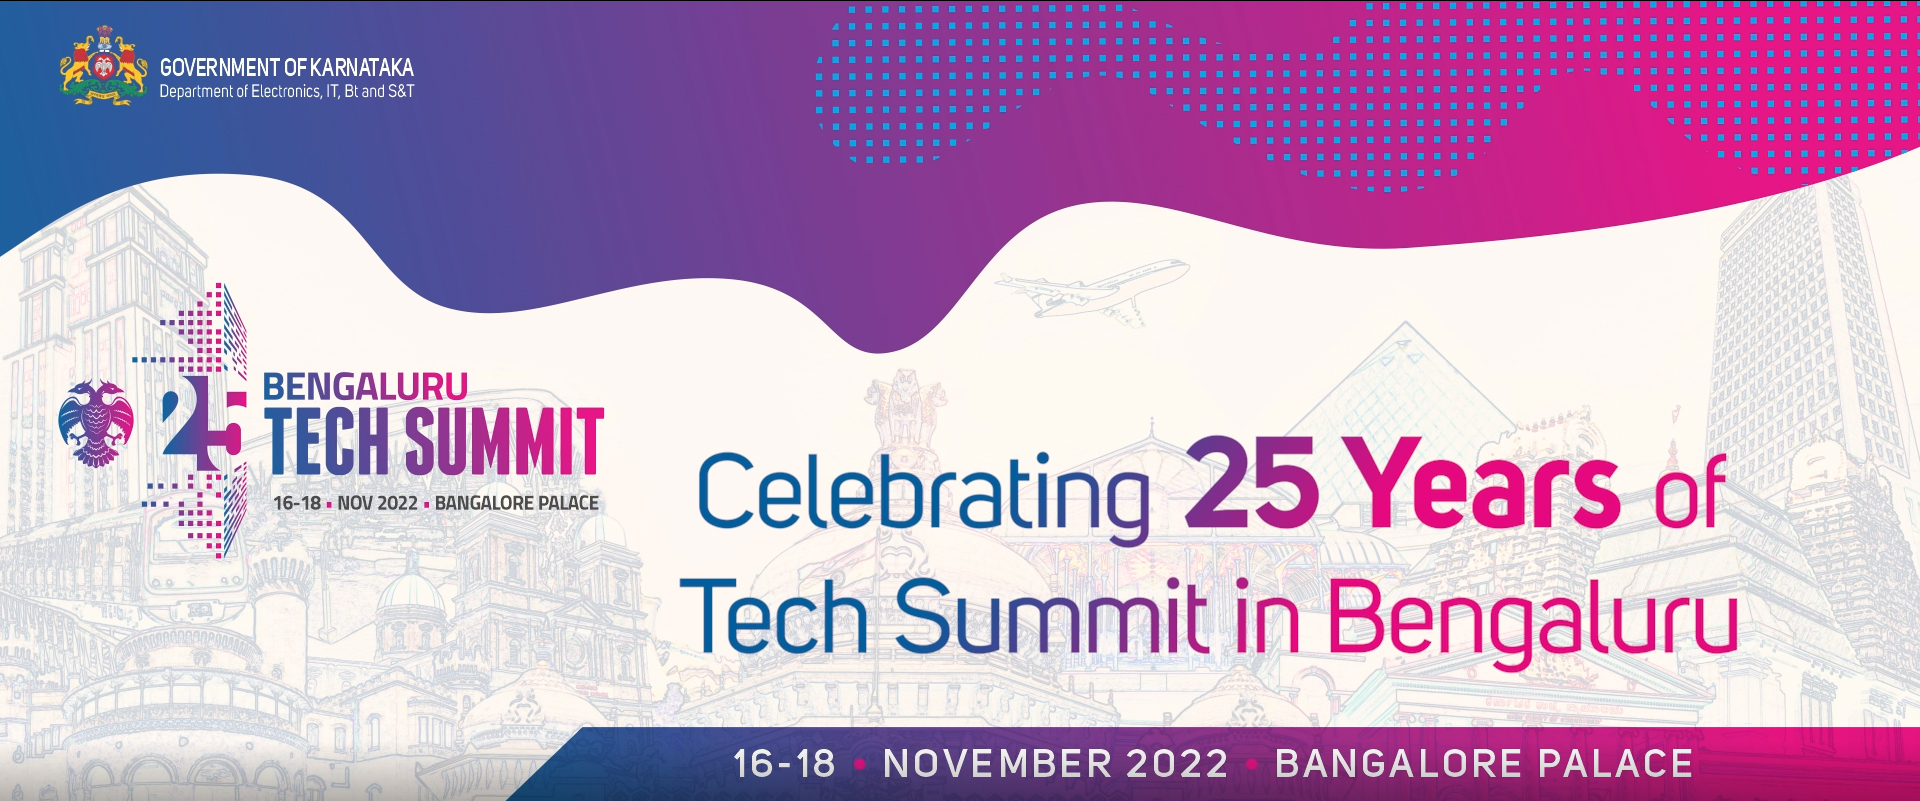 Nagi Bioscience at Bengaluru Tech Summit 2022 India Nagi Bioscience has been selected to be part of the AIT India Program to explore the market and partnership possibilities